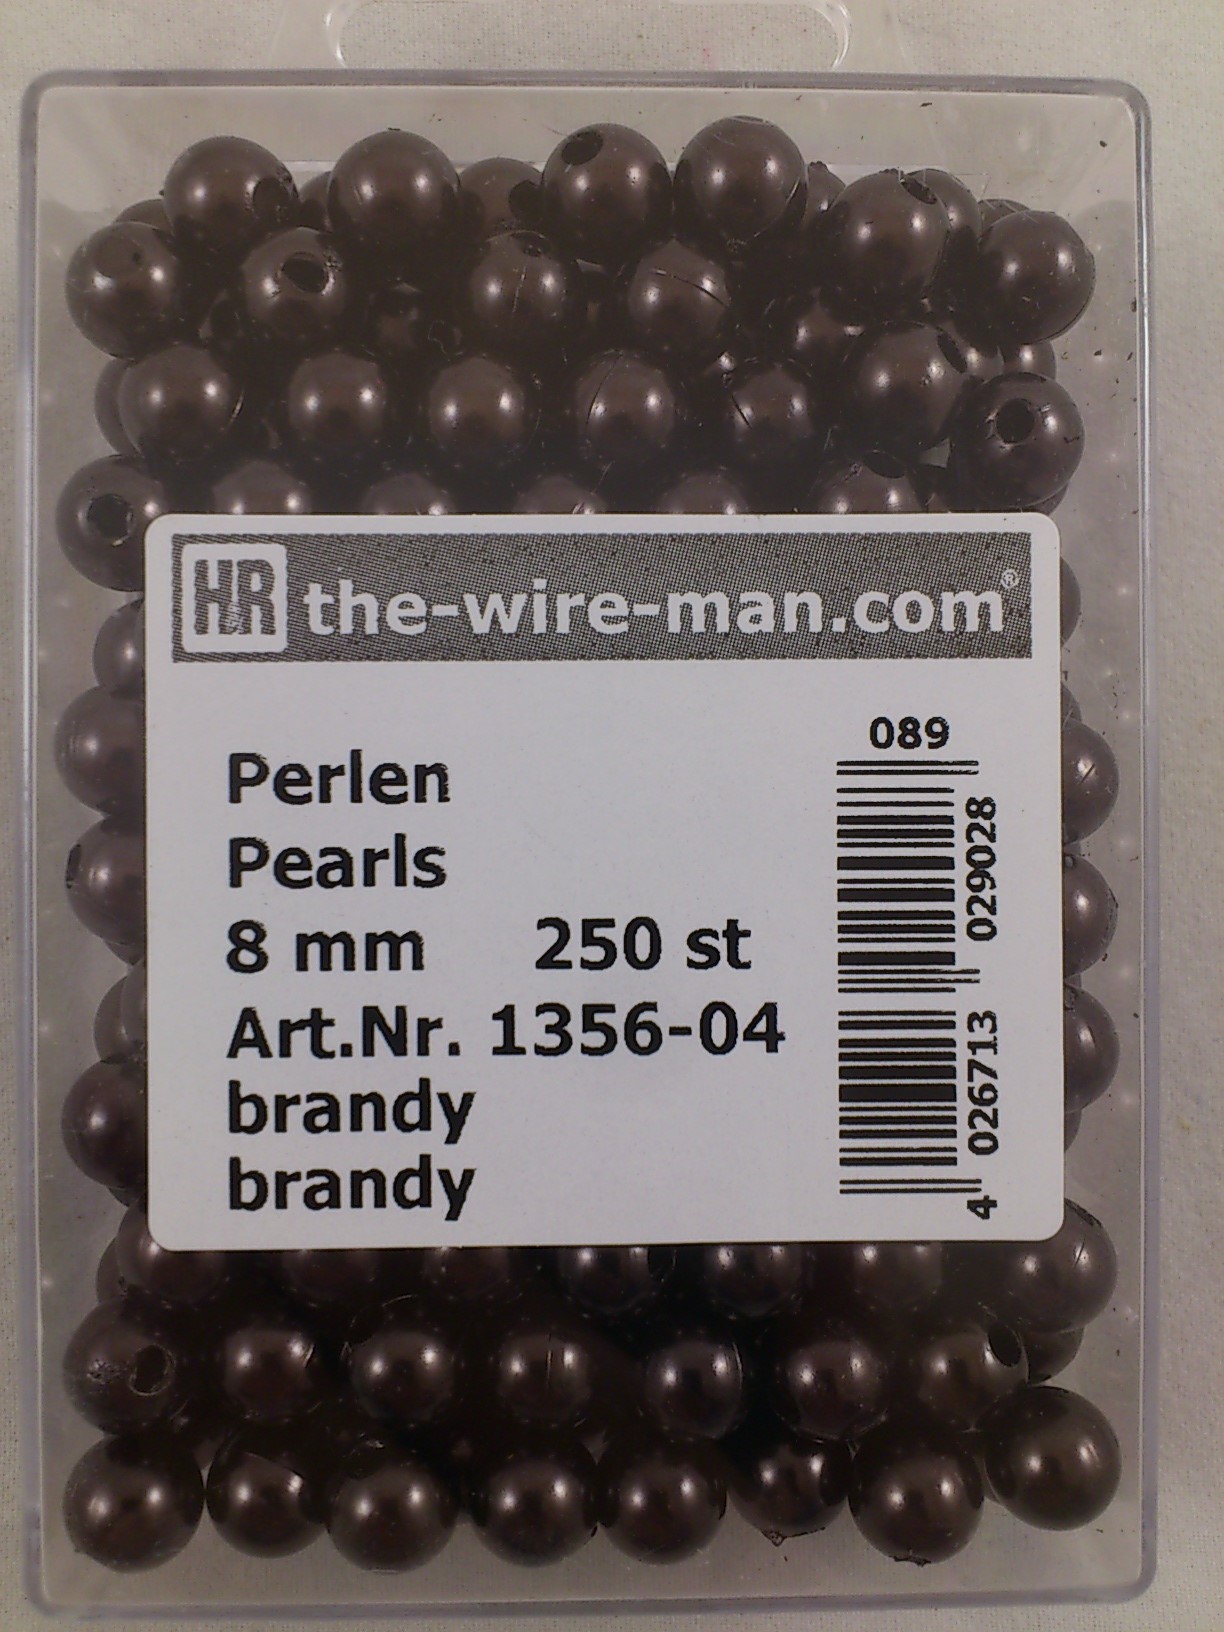 Perlen brandy 8 mm. 250 st.